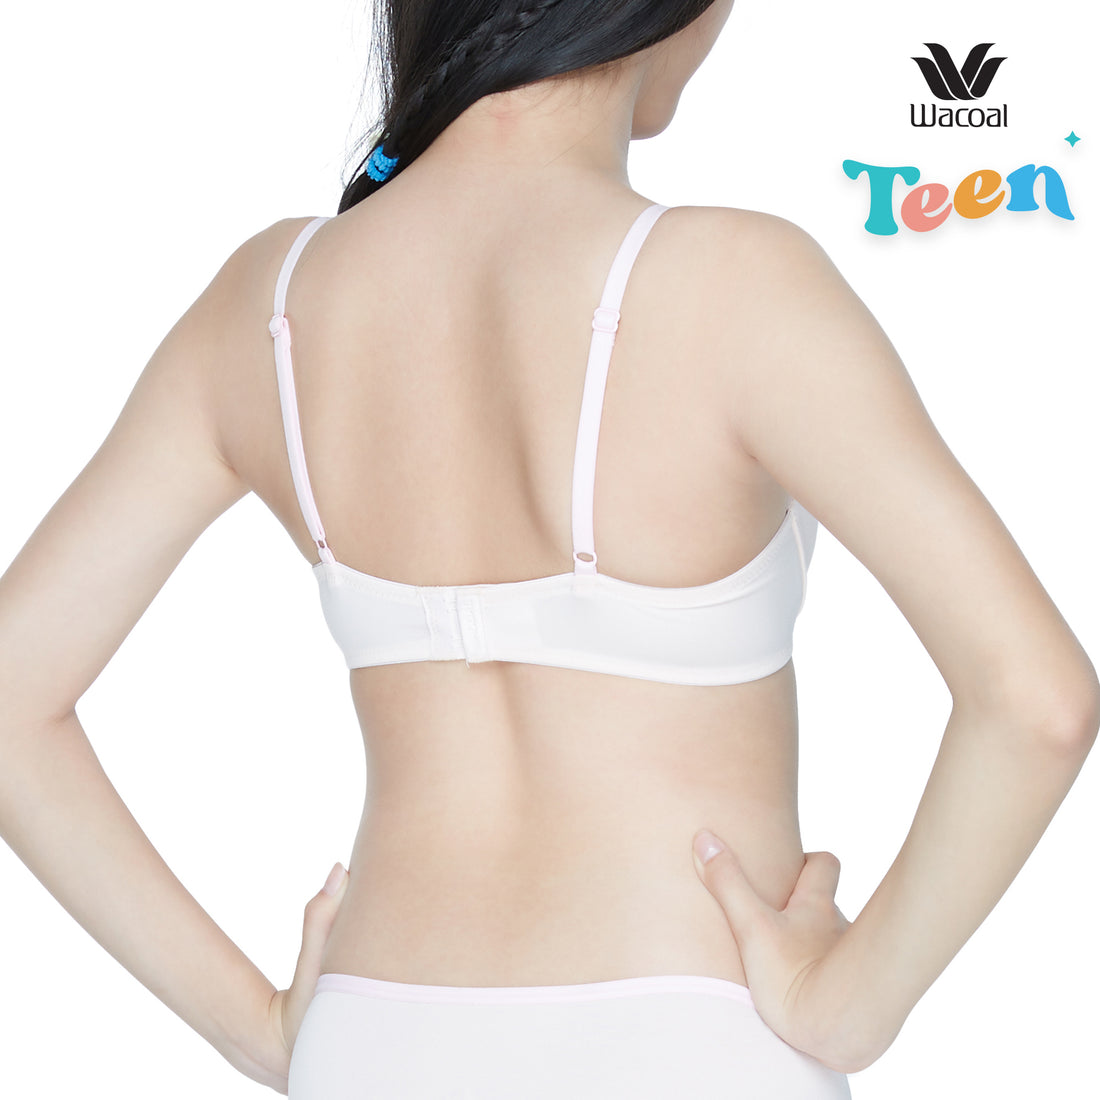 Wacoal Teen Bikini Panty Underwear for teenagers Model MUT305 Gray (GY –  Thai Wacoal Public Company Limited